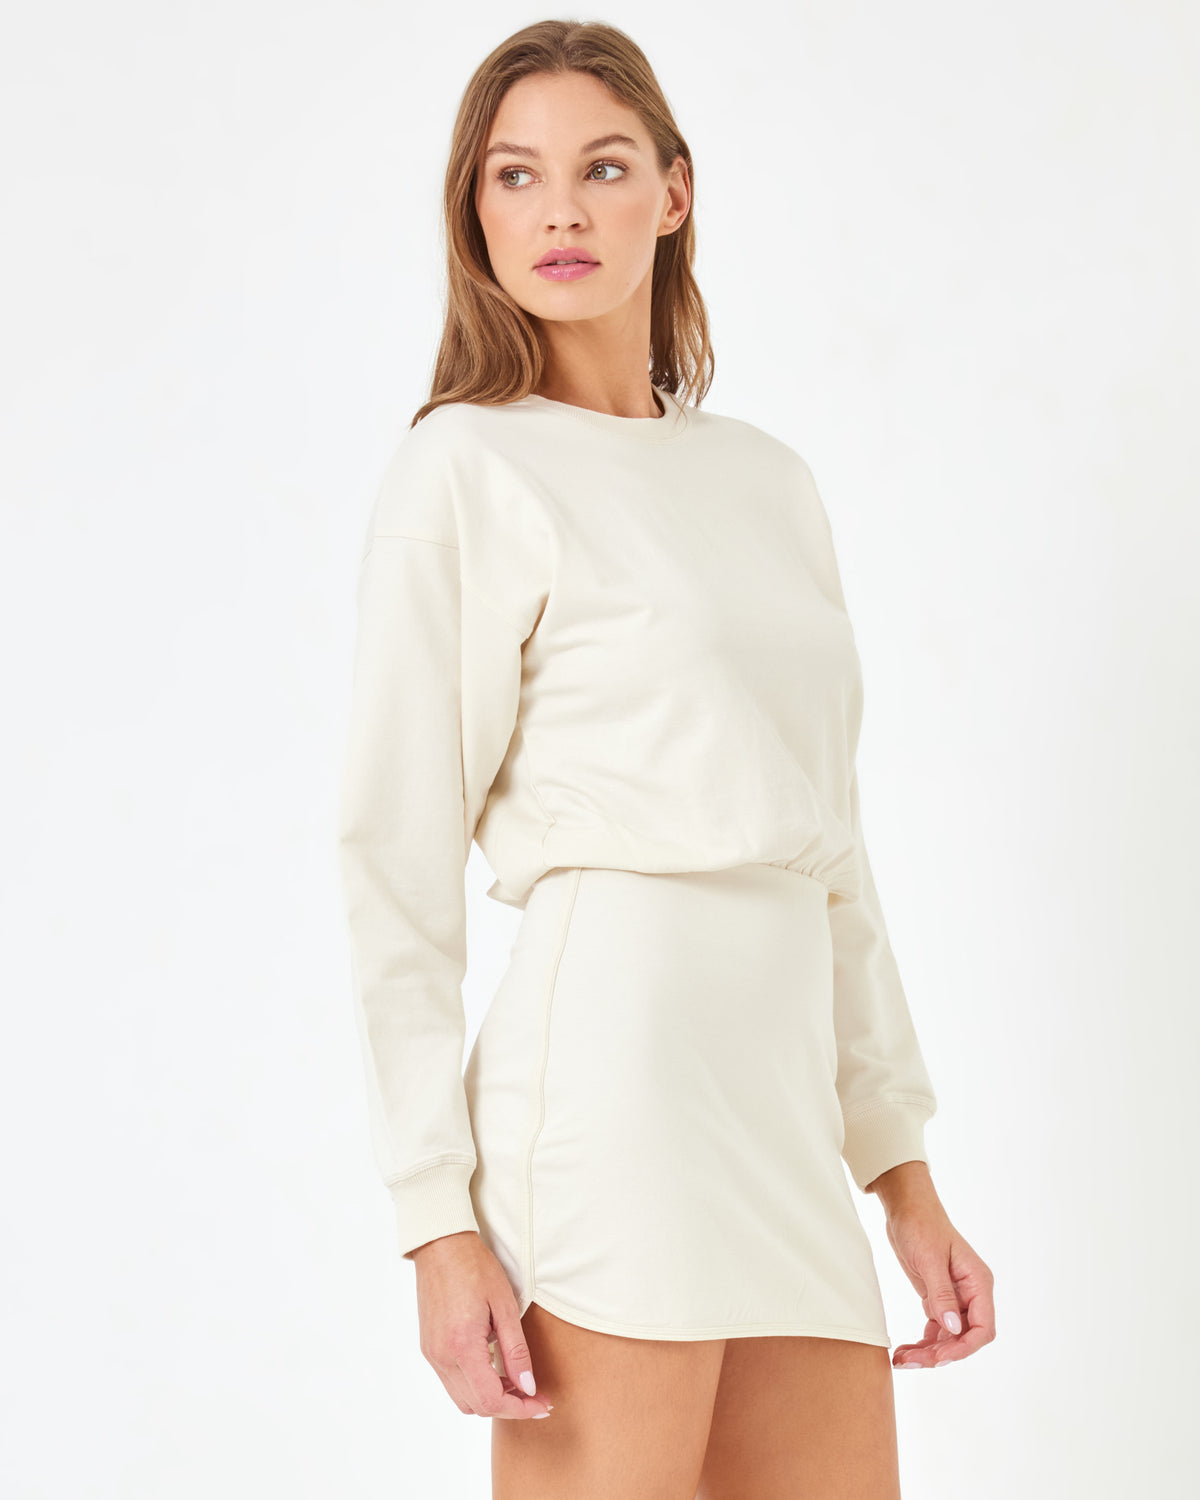 LSPACE X Anthropologie Groove Dress - Cream Cream | Model: Daria (size: S) | Hover